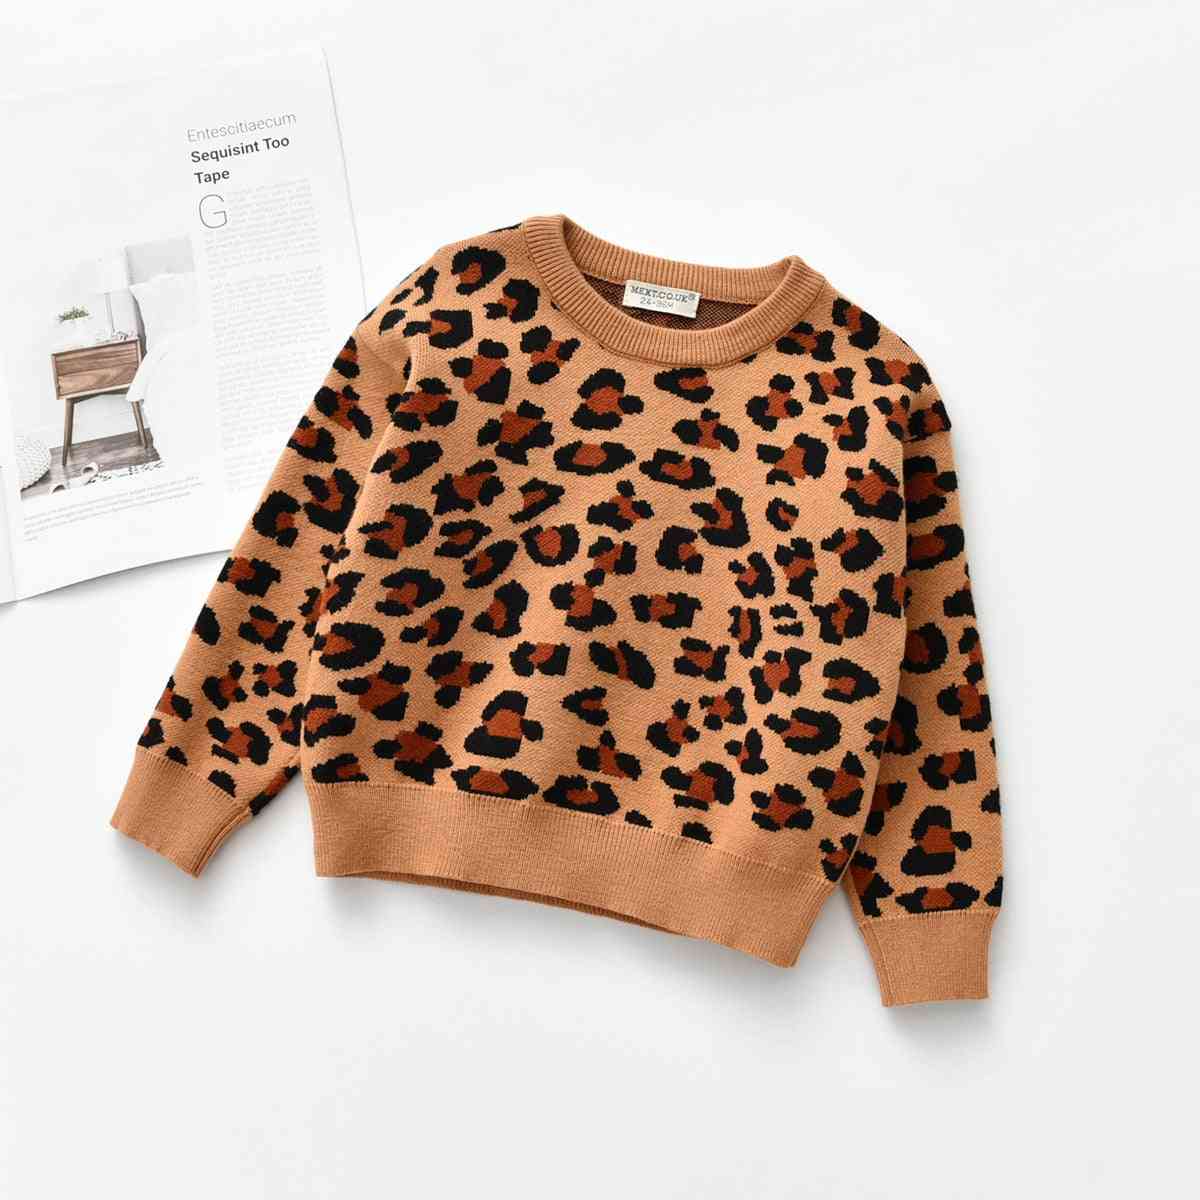 Suéter de punto de leopardo, tops casuales de manga larga para niños, ropa para niño / niña